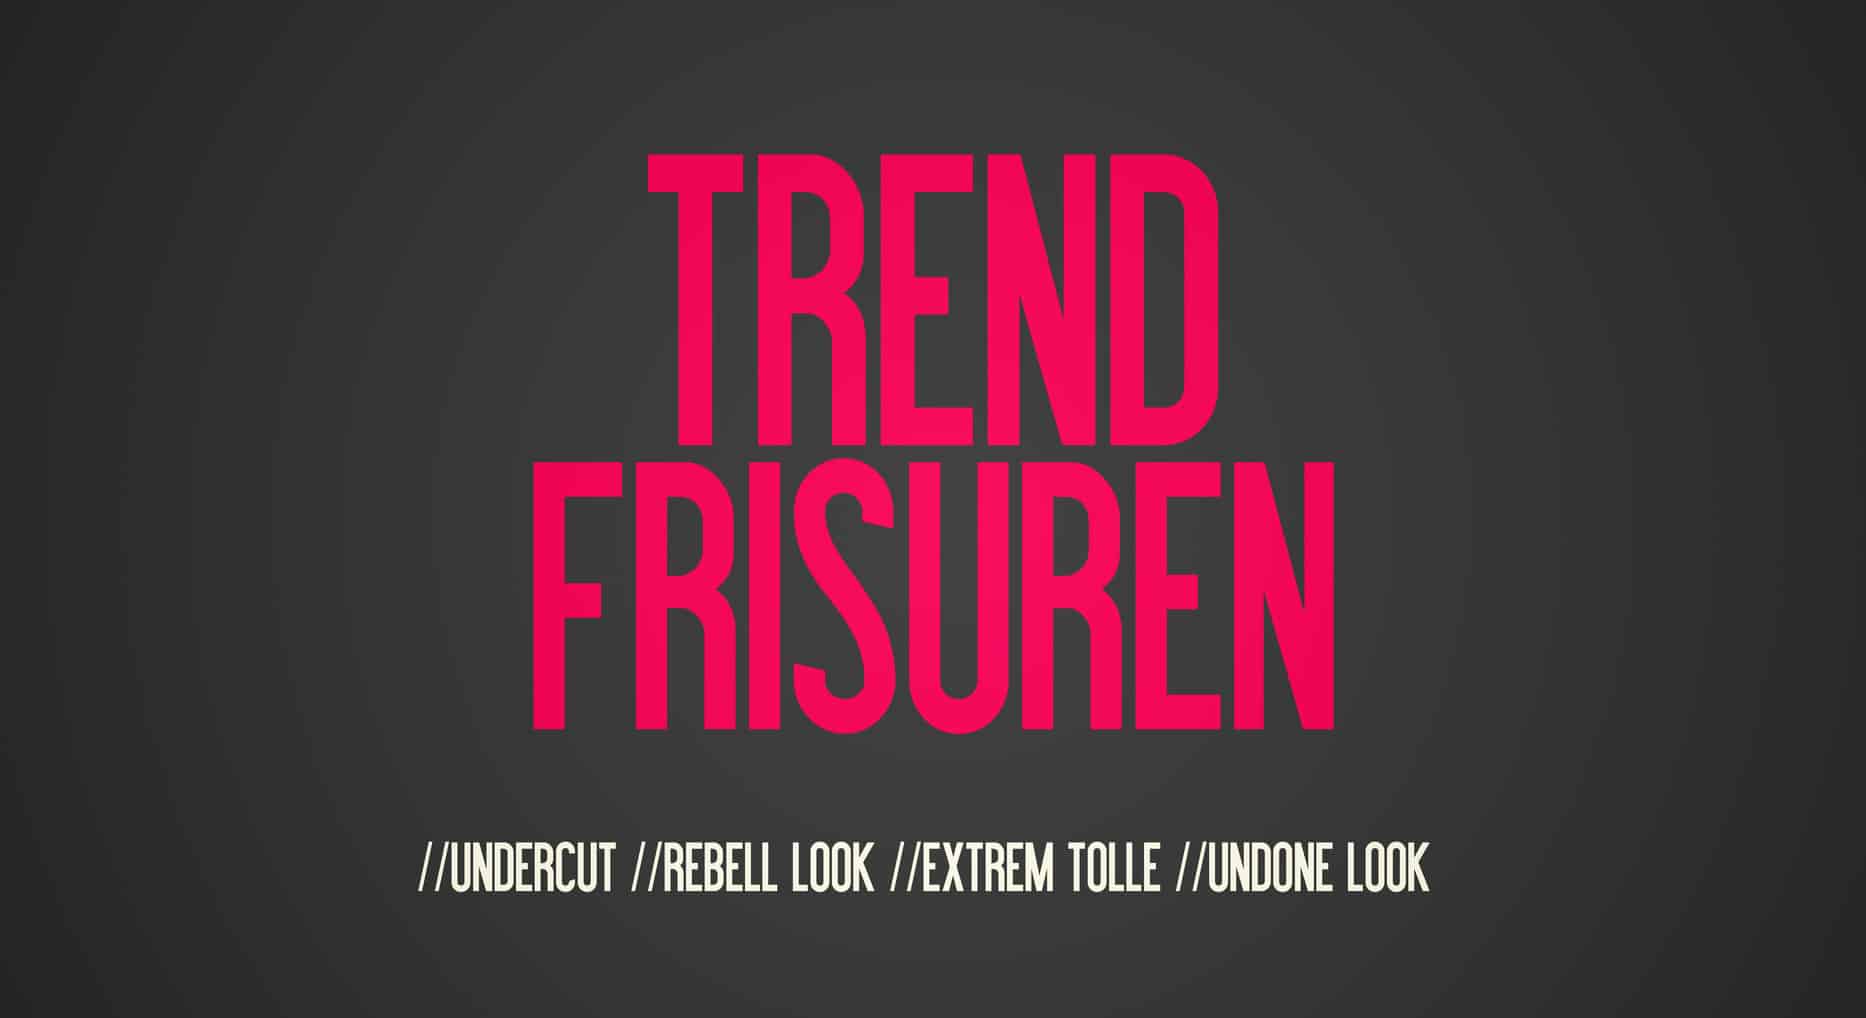 Trend Frisuren - Undercut, Rebell Look, Extreme Tolle, Undone Look